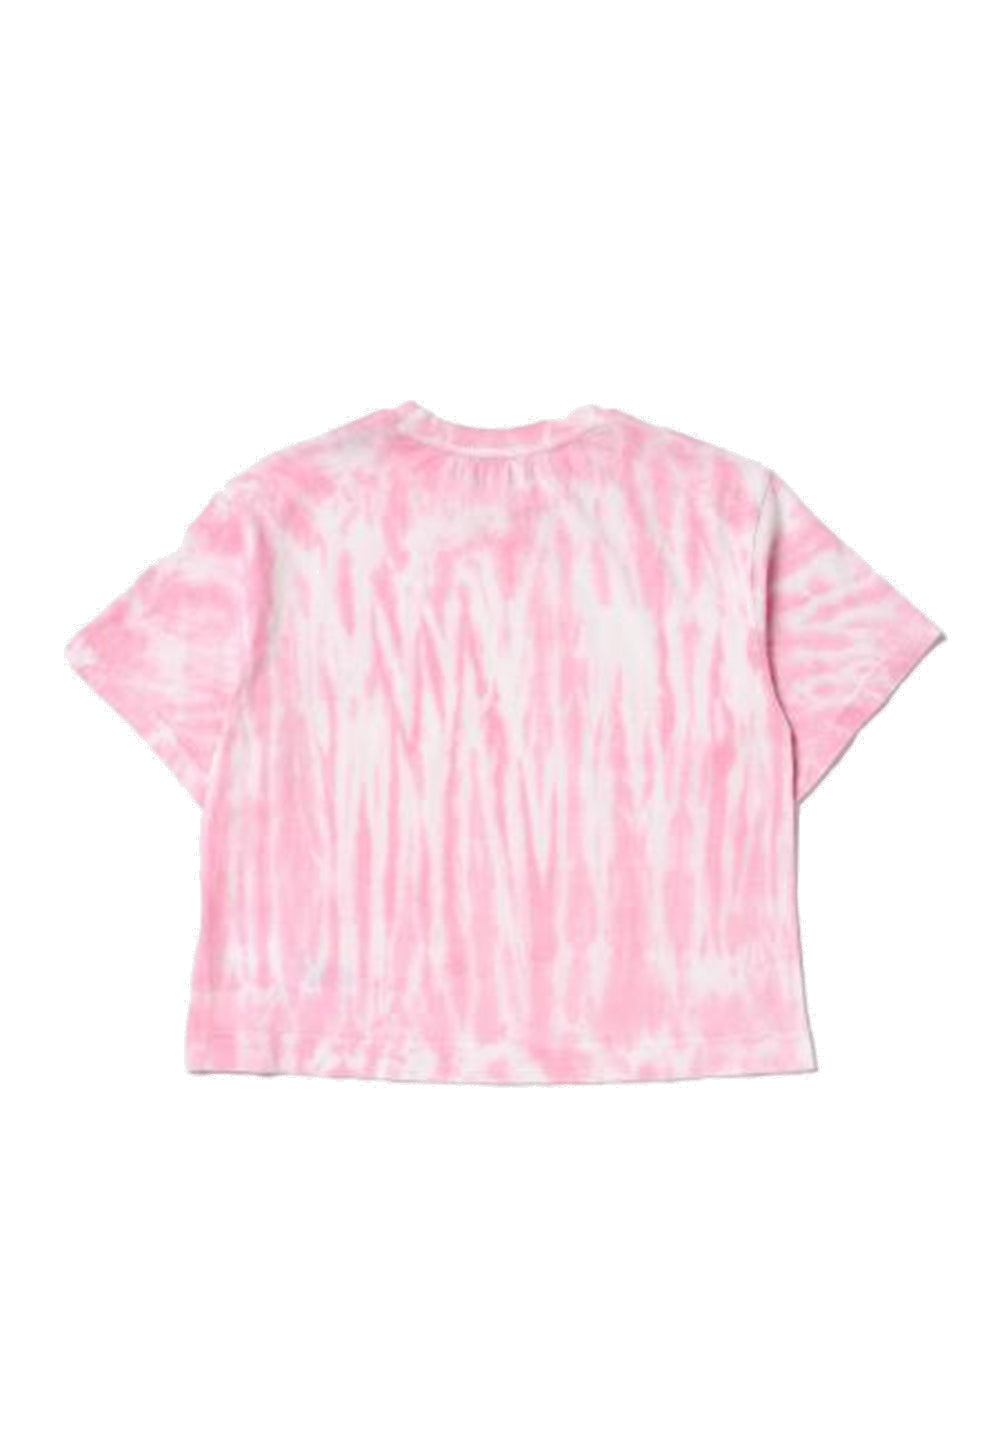 T-shirt cropped rosa per bambina - Primamoda kids